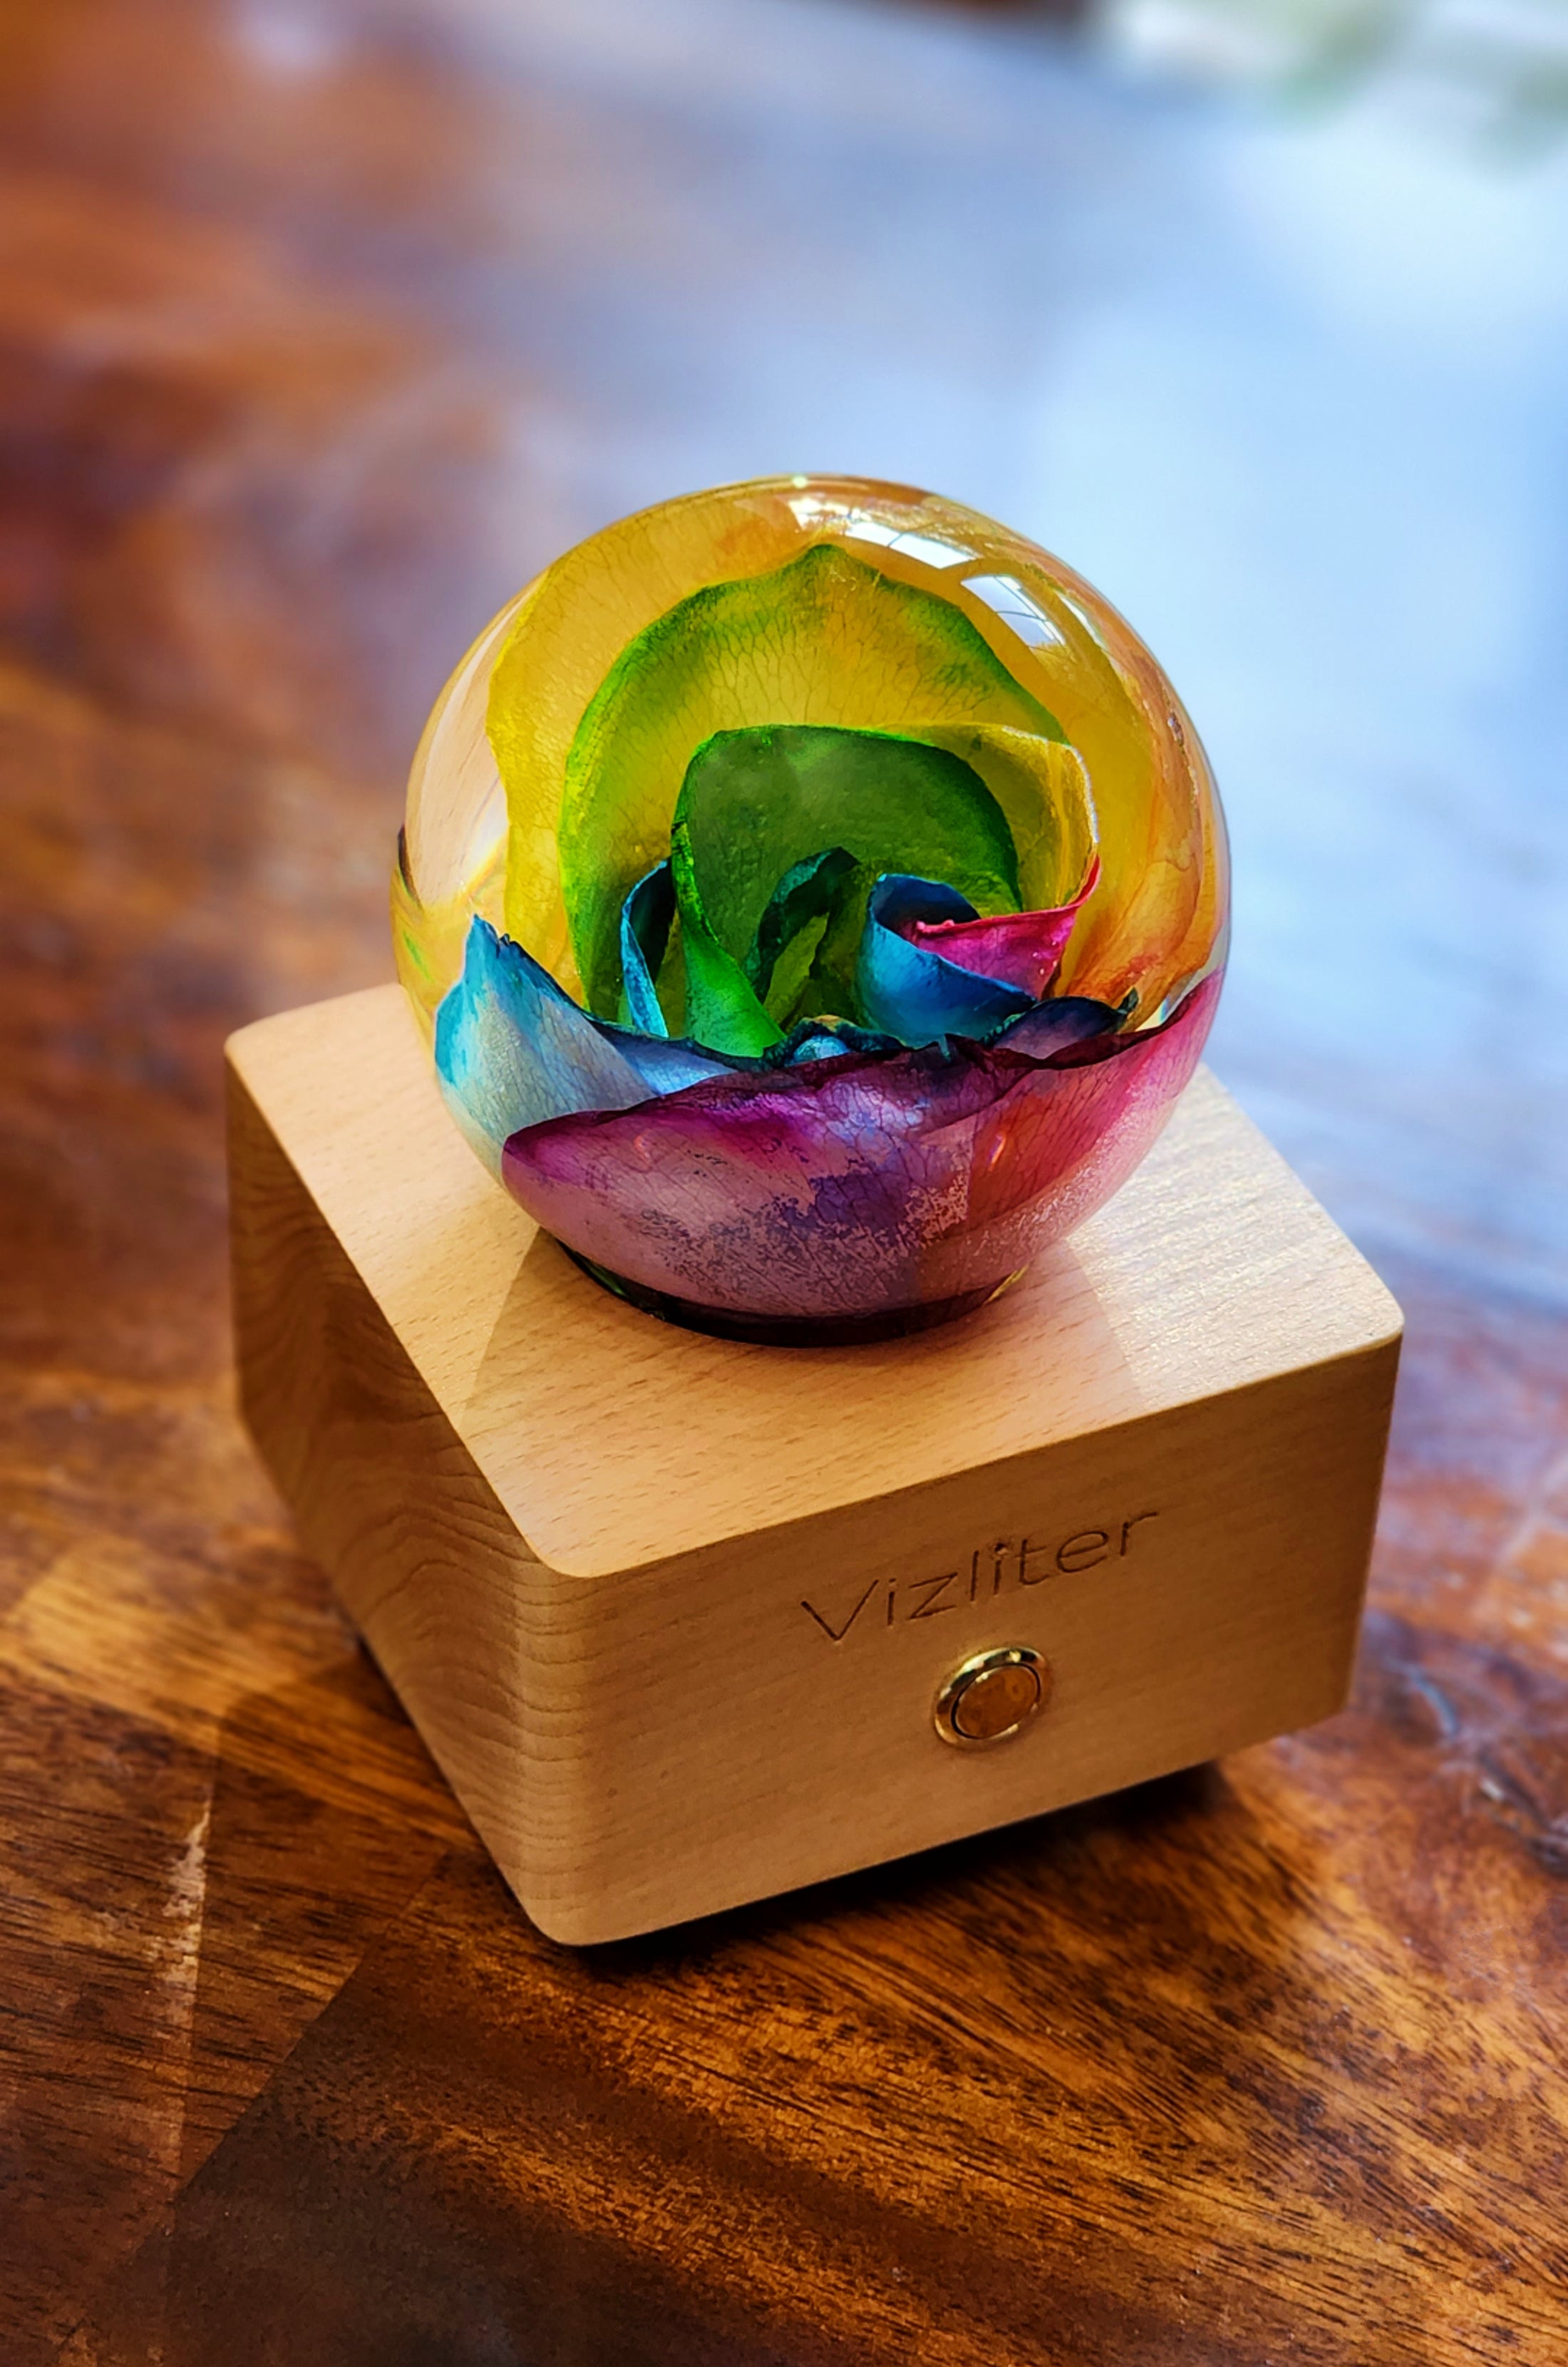 Vizliter Bluetooth Speaker Crystal Ball LED 80mm Lighting Premium Preserved Natural Flower with Wood Base Never Withered Eternal Night Light Rainbow Rose